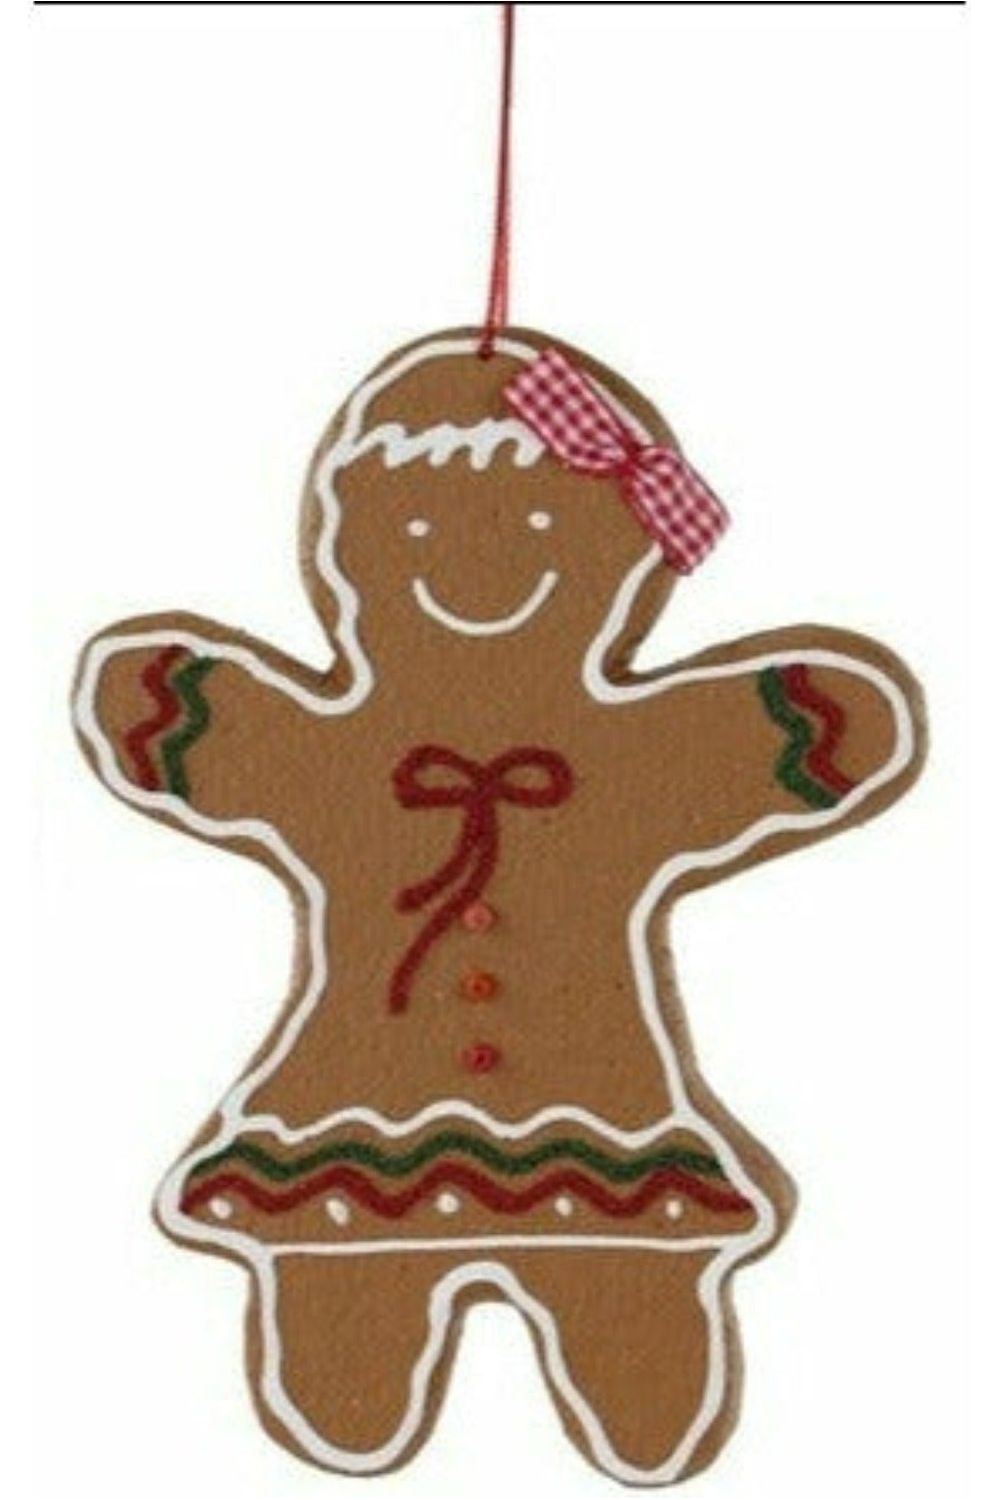 Shop For 8" Gingerbread Ornament XJ4447